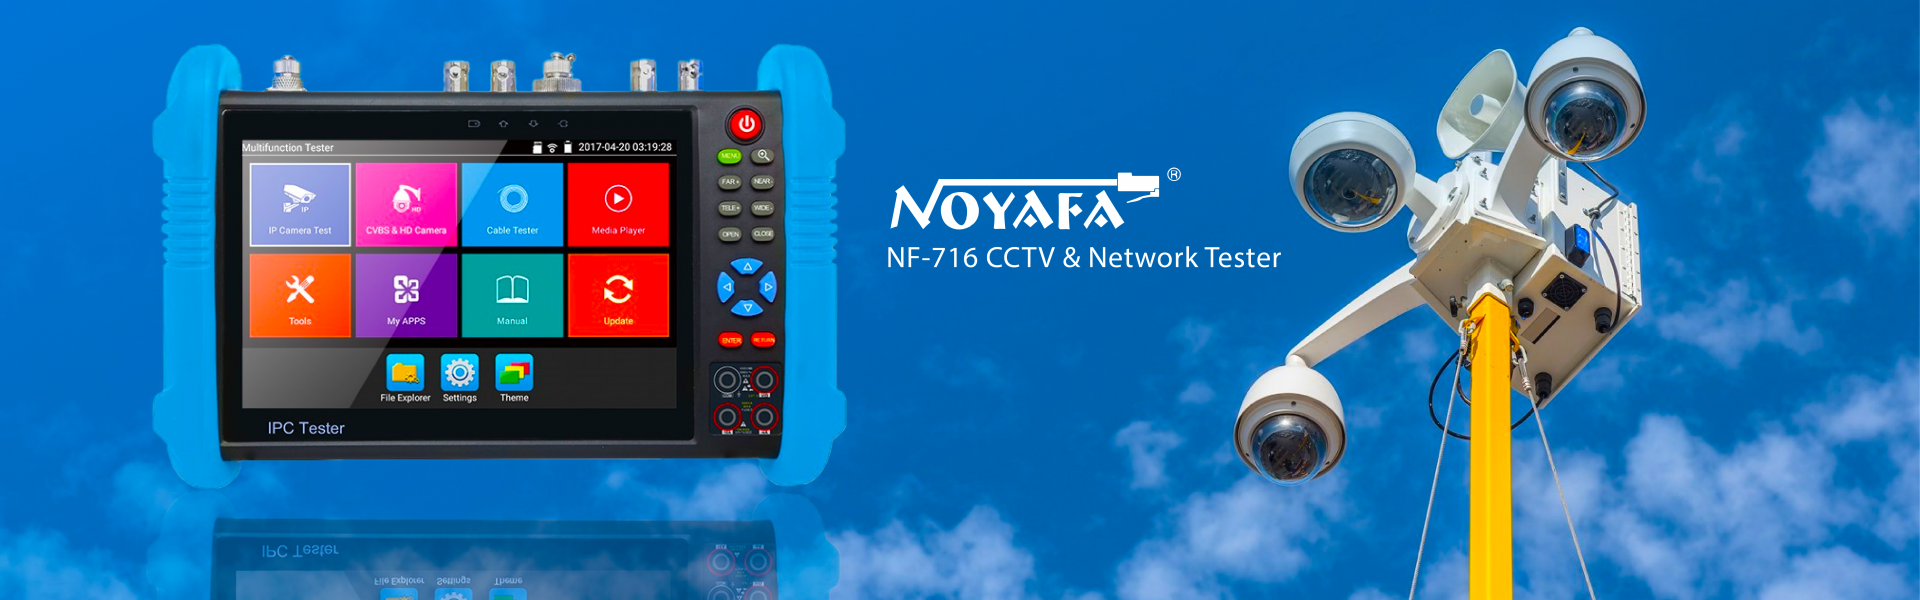 NF-716 CCTV & Network Tester